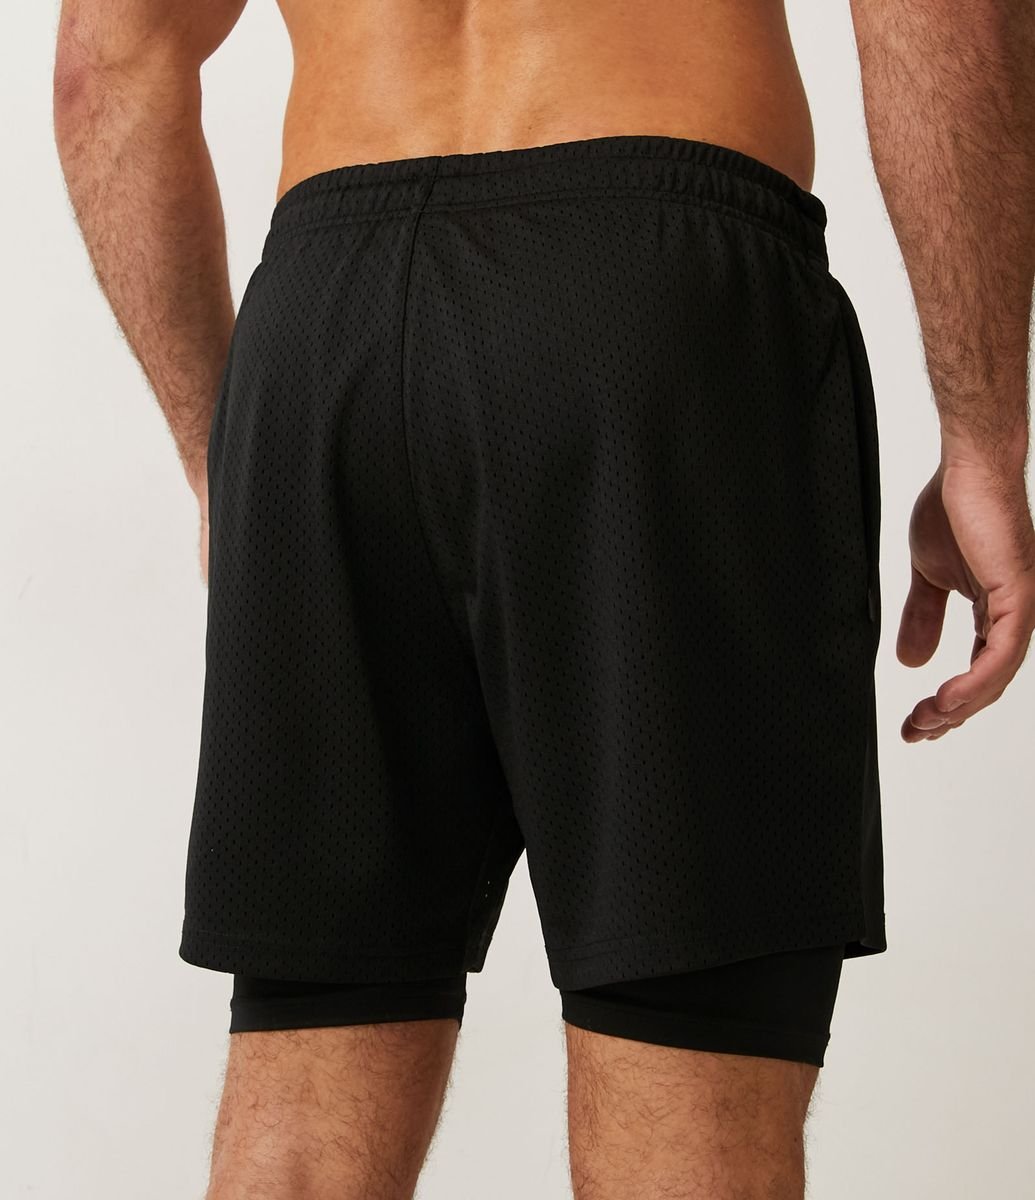 Shorts Curto Laser Preto com bermuda interna de compressão - Roupa  Masculina